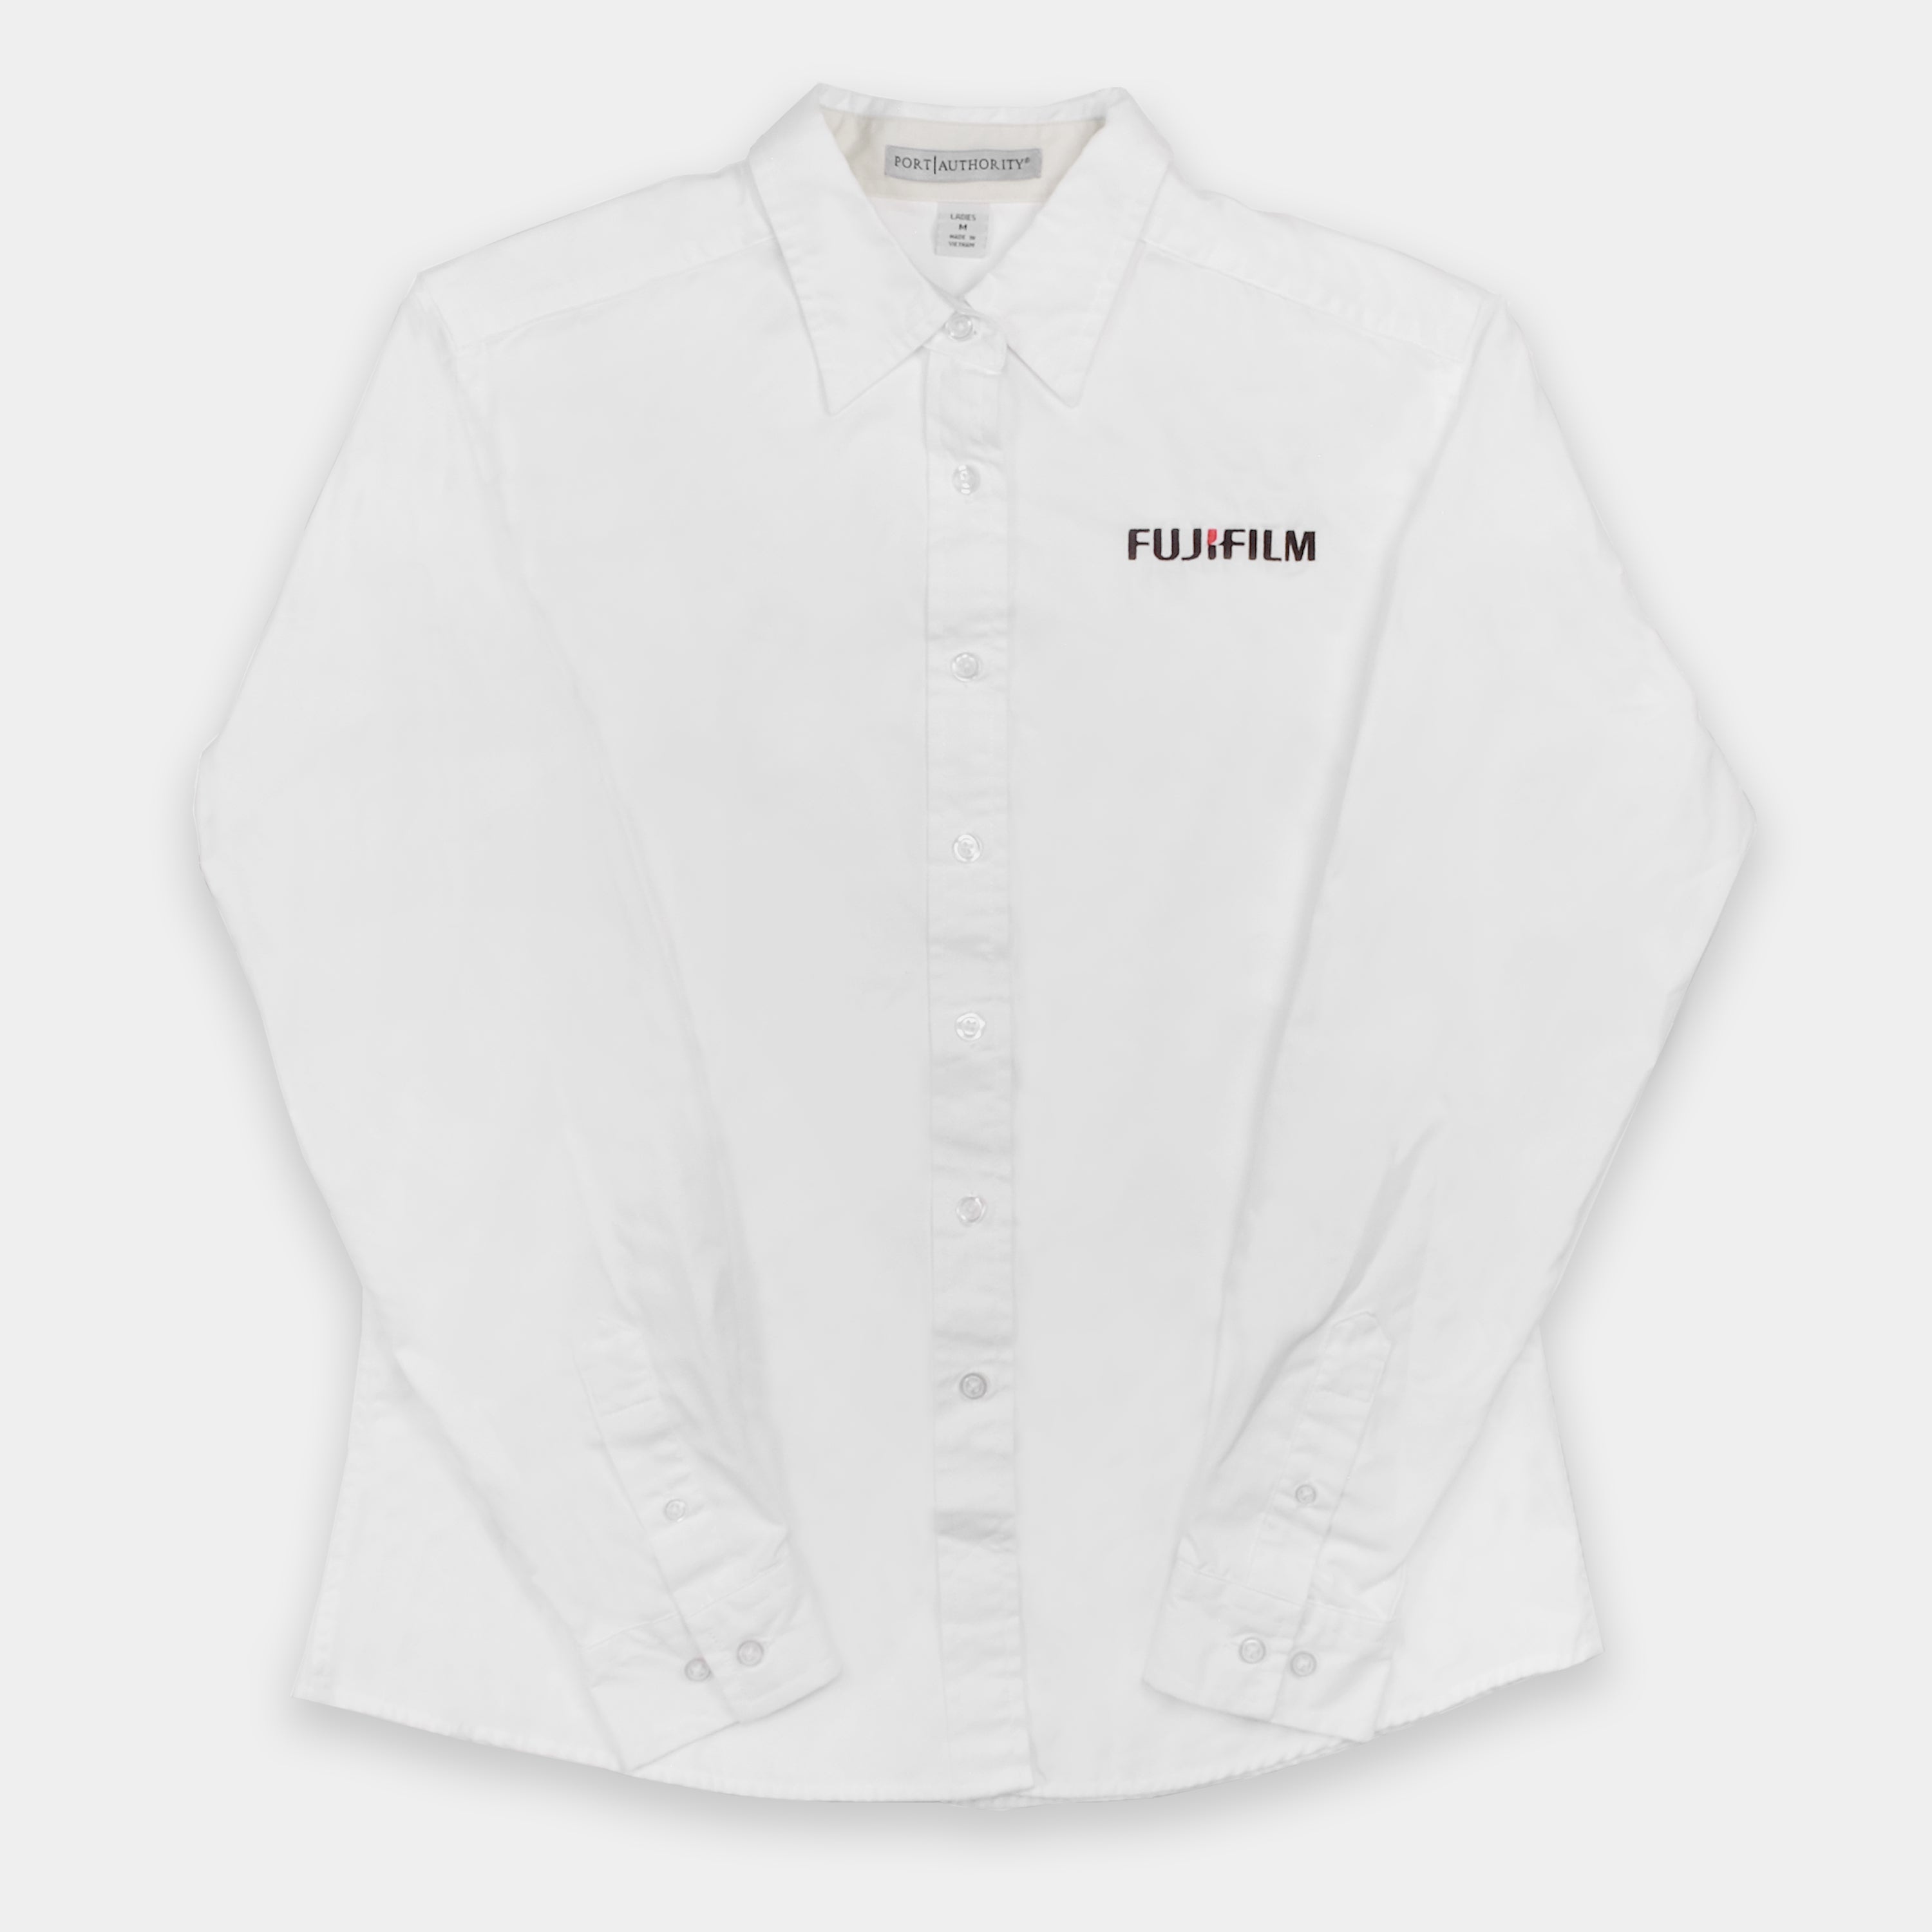 Vintage White Fujifilm Long Sleeve Soft Cotton Blend Button Up Shirt - Women's Medium